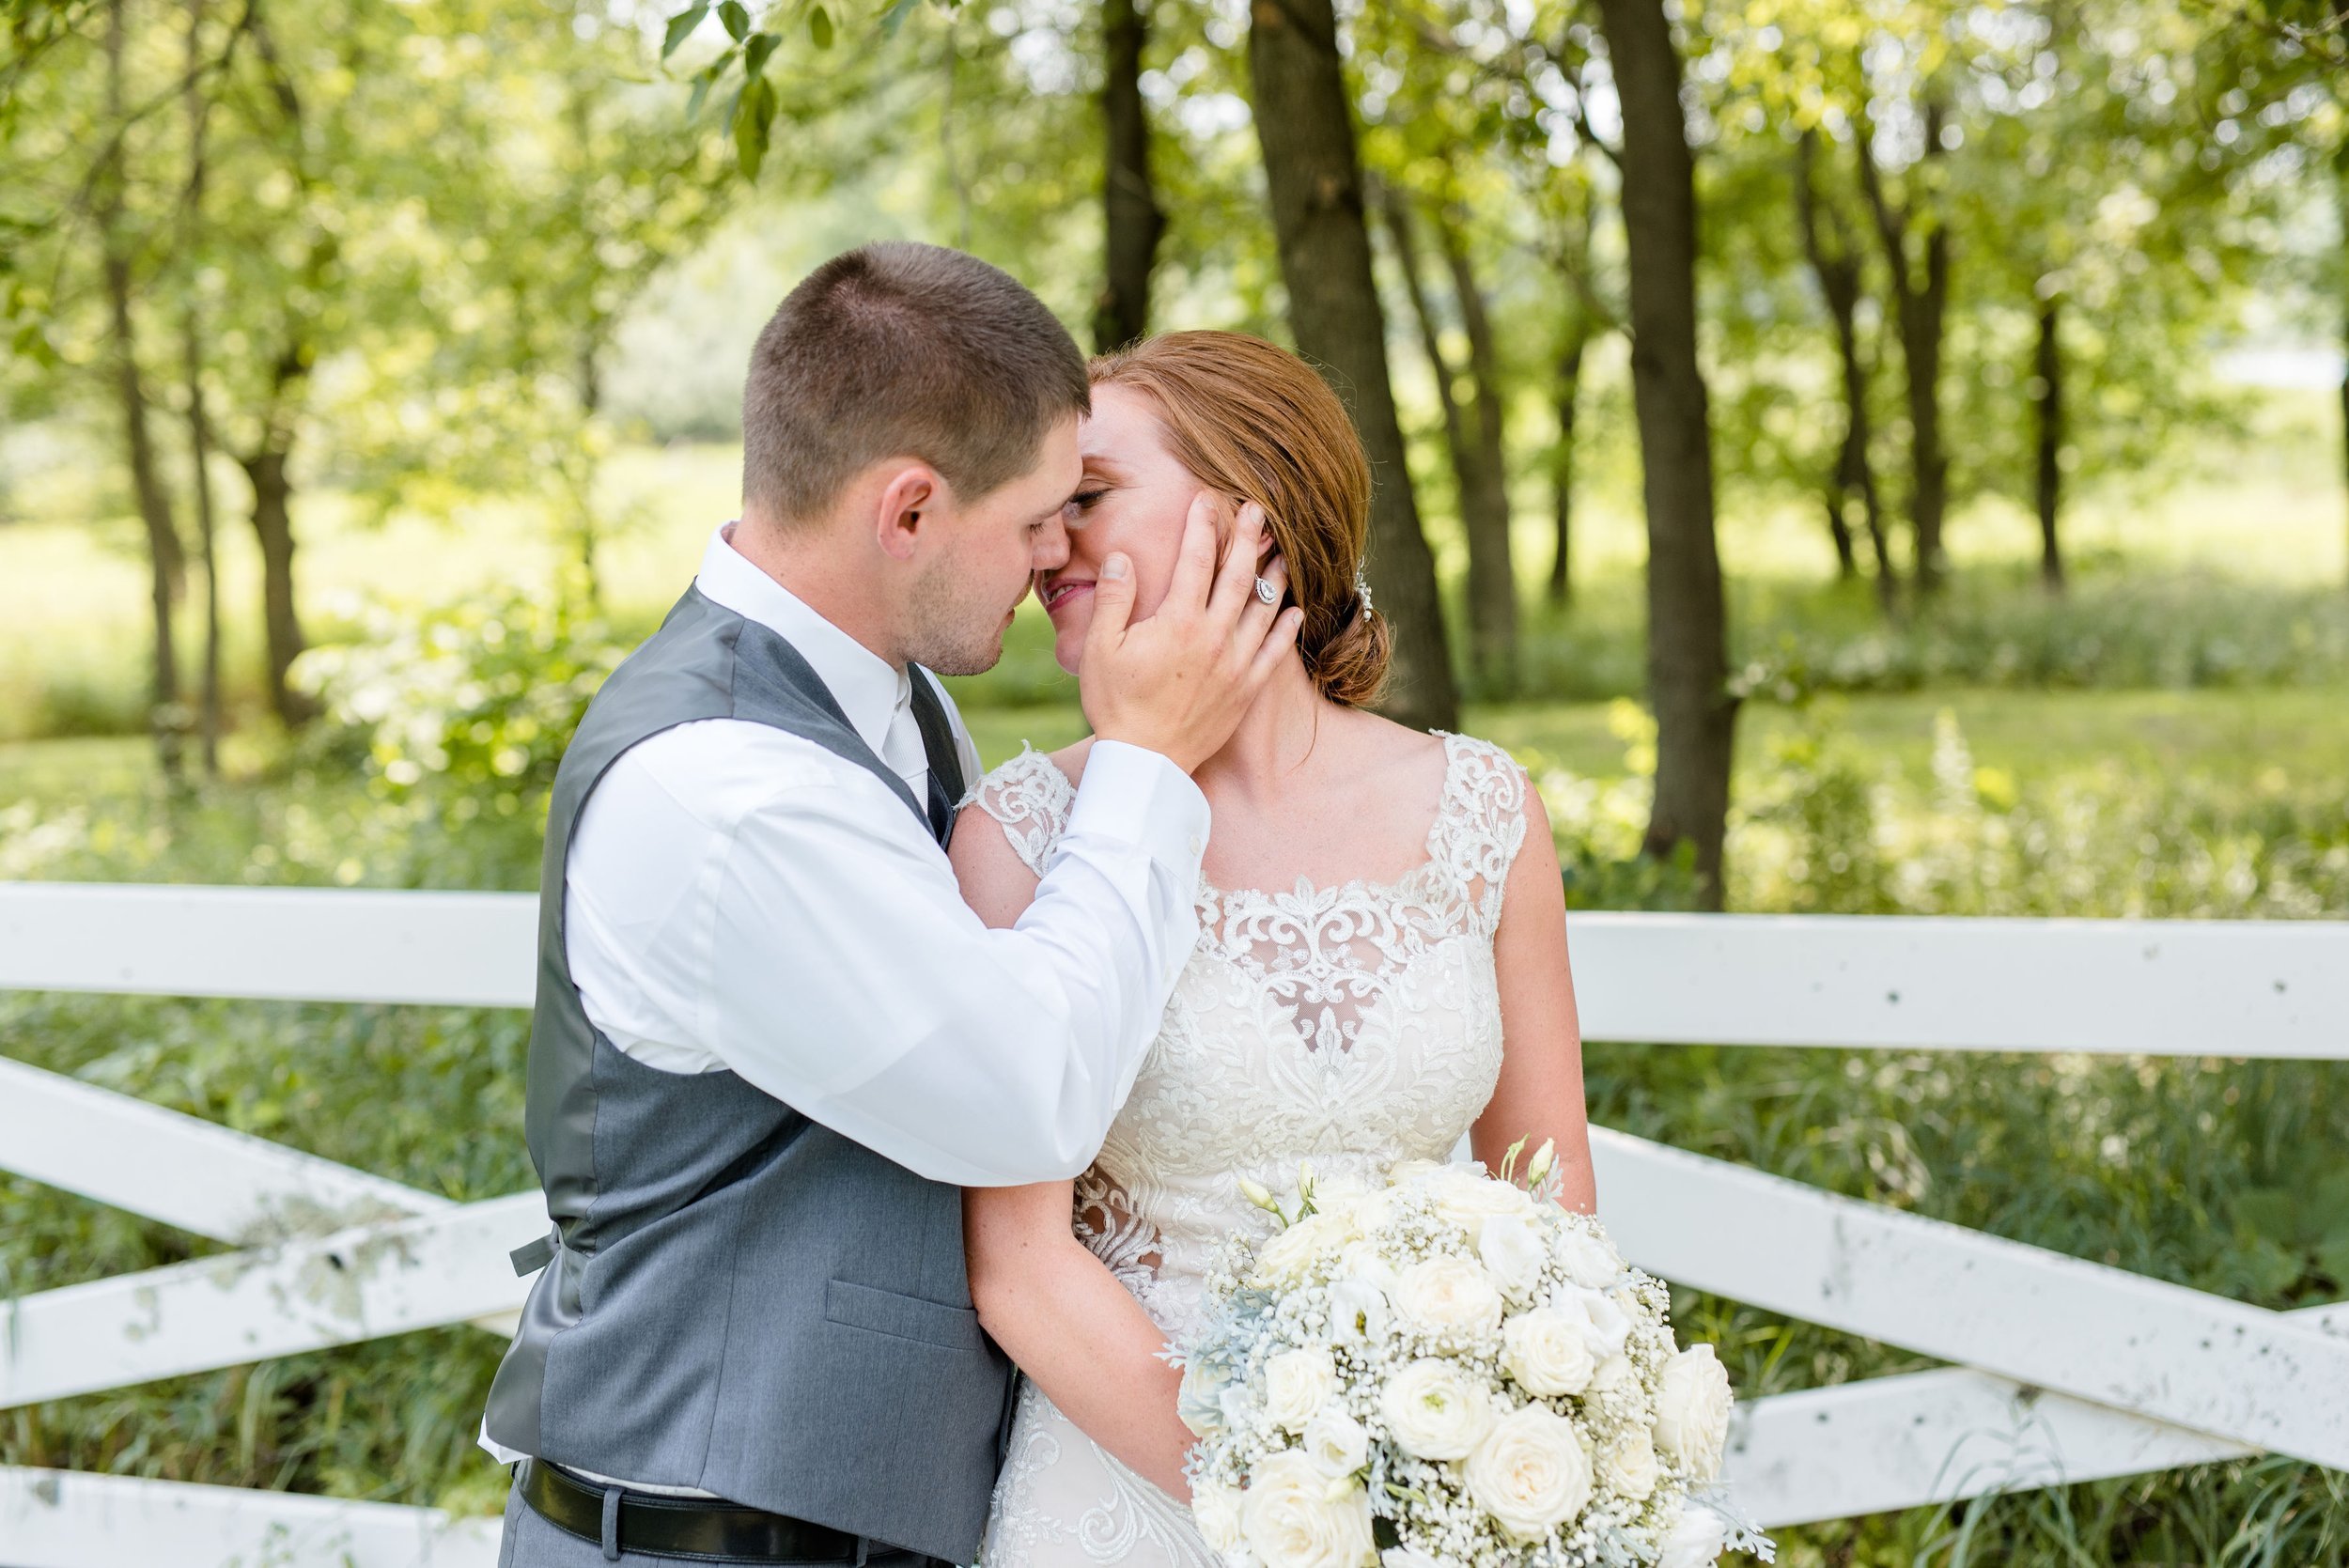 Erickson Farmstead Summer Wedding Bride and Groom Share a Kiss.jpeg